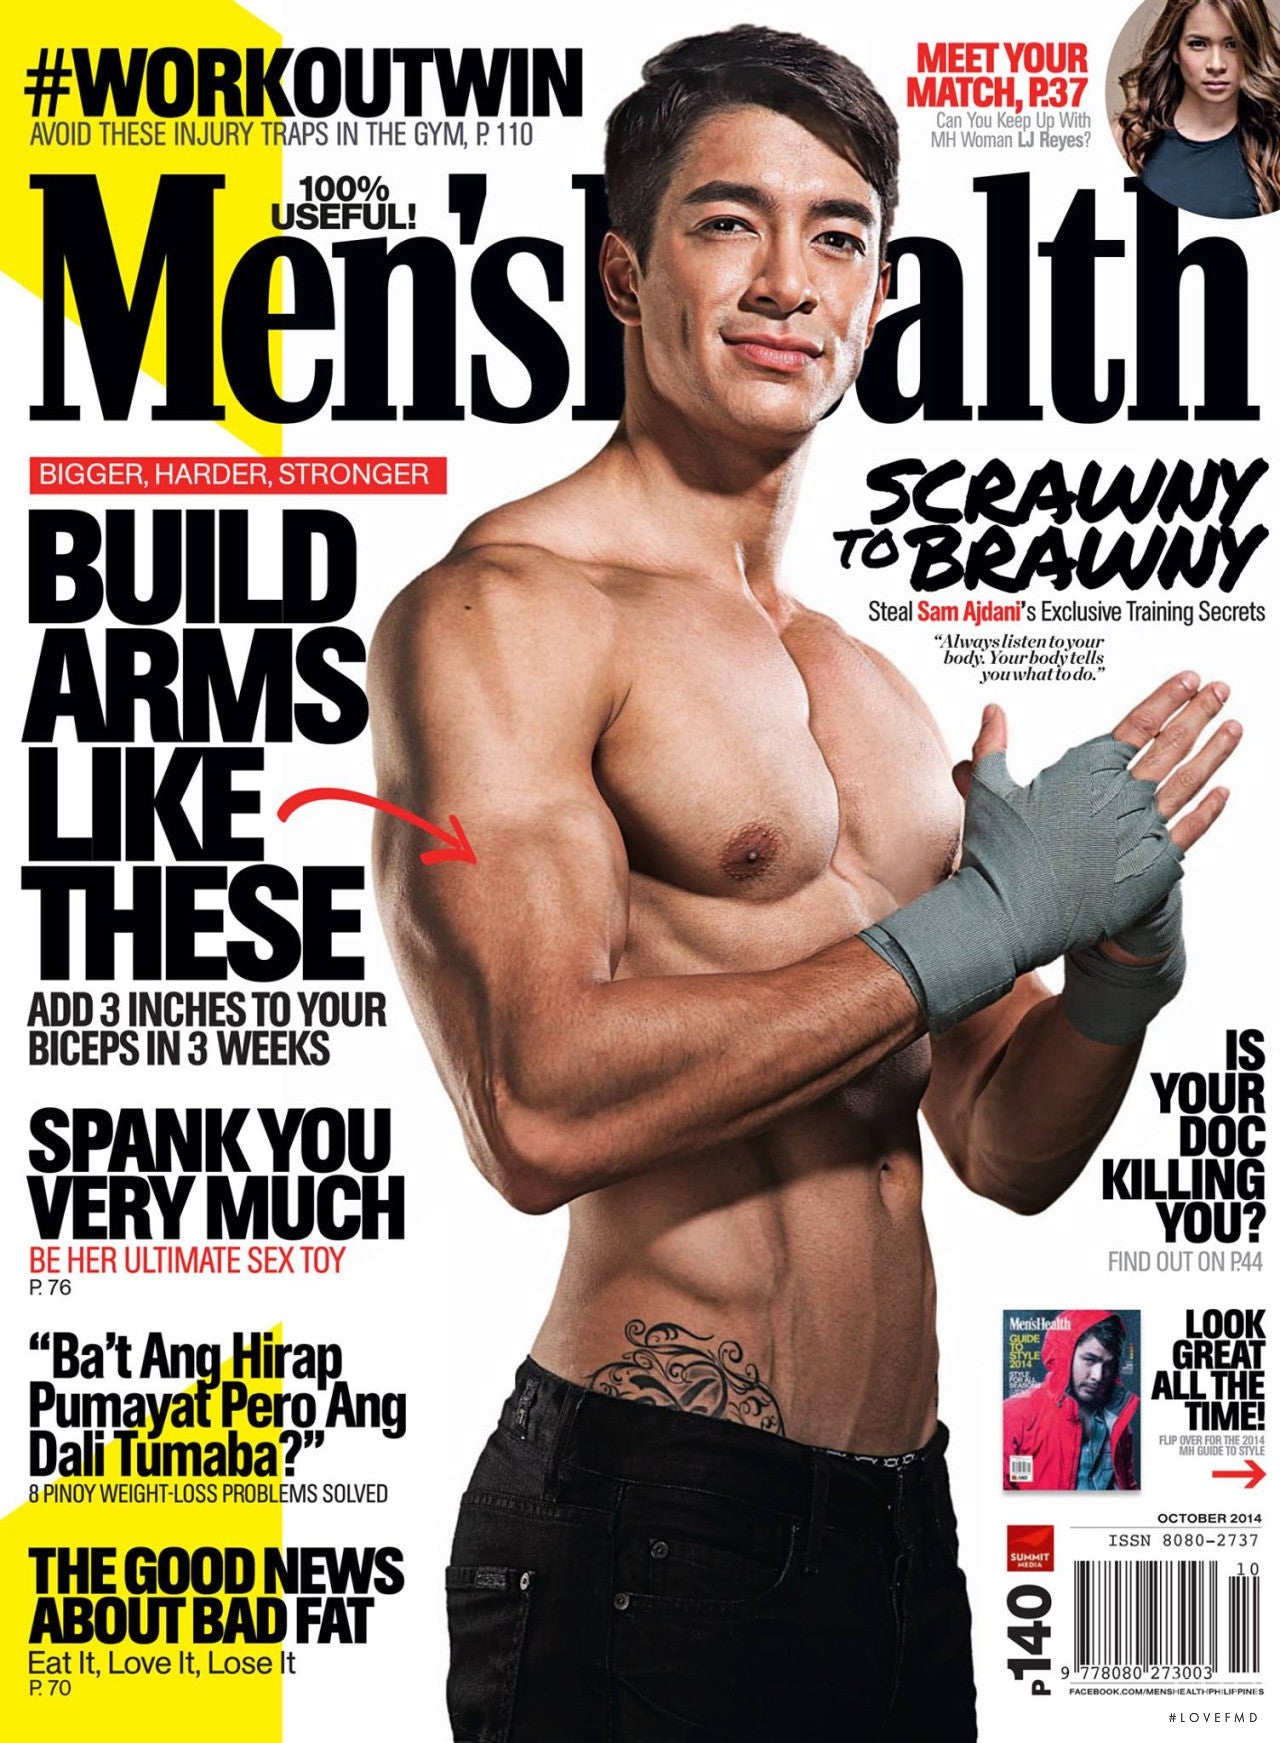 Men's-Health-cover-Coach-Sam-Ajdani